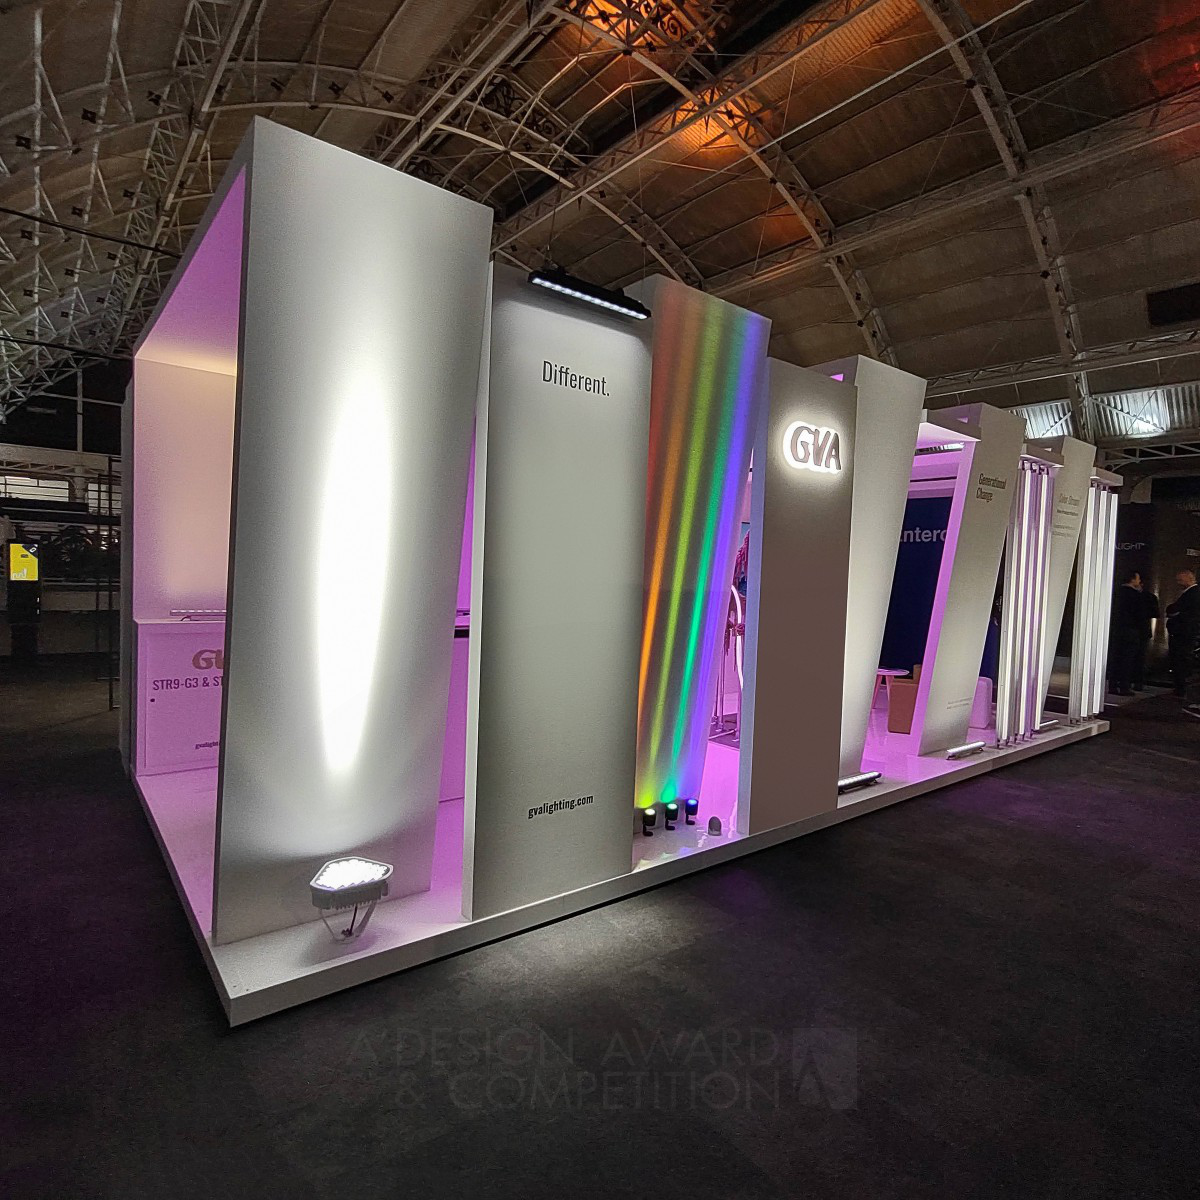 Nargiza Usmanova wins Iron at the prestigious A' Trade Show Architecture, Interiors, and Exhibit Design Award with Lighting Tunnel Exhibition Booth.